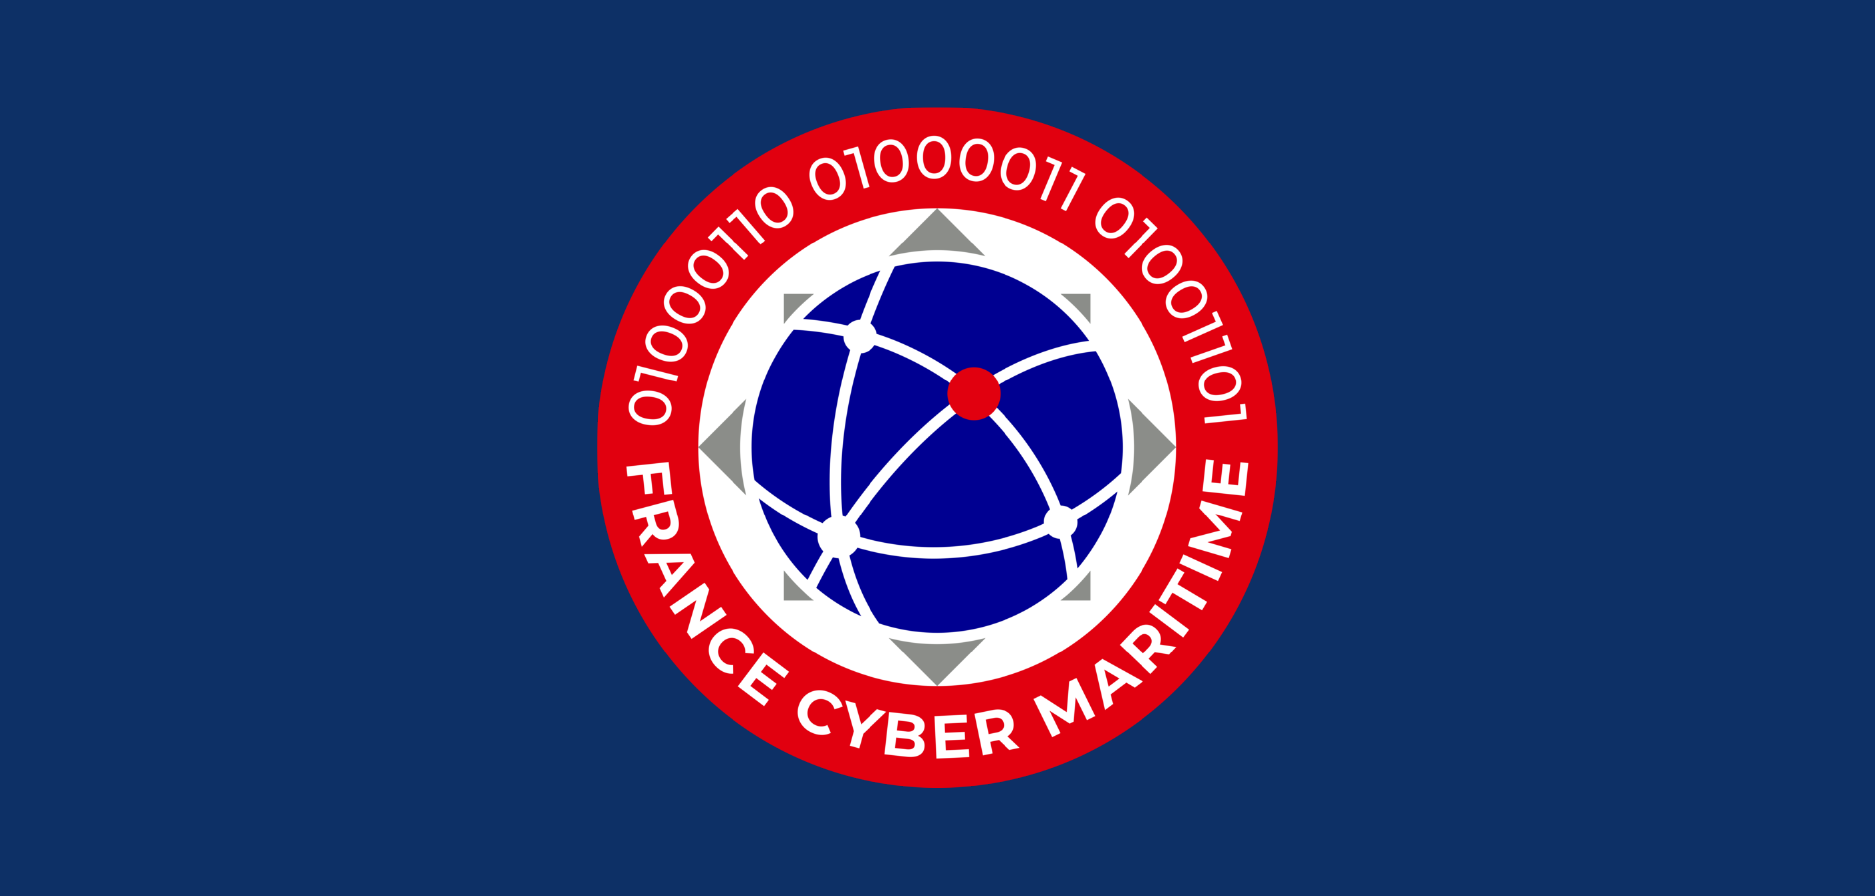 France Cyber Maritime